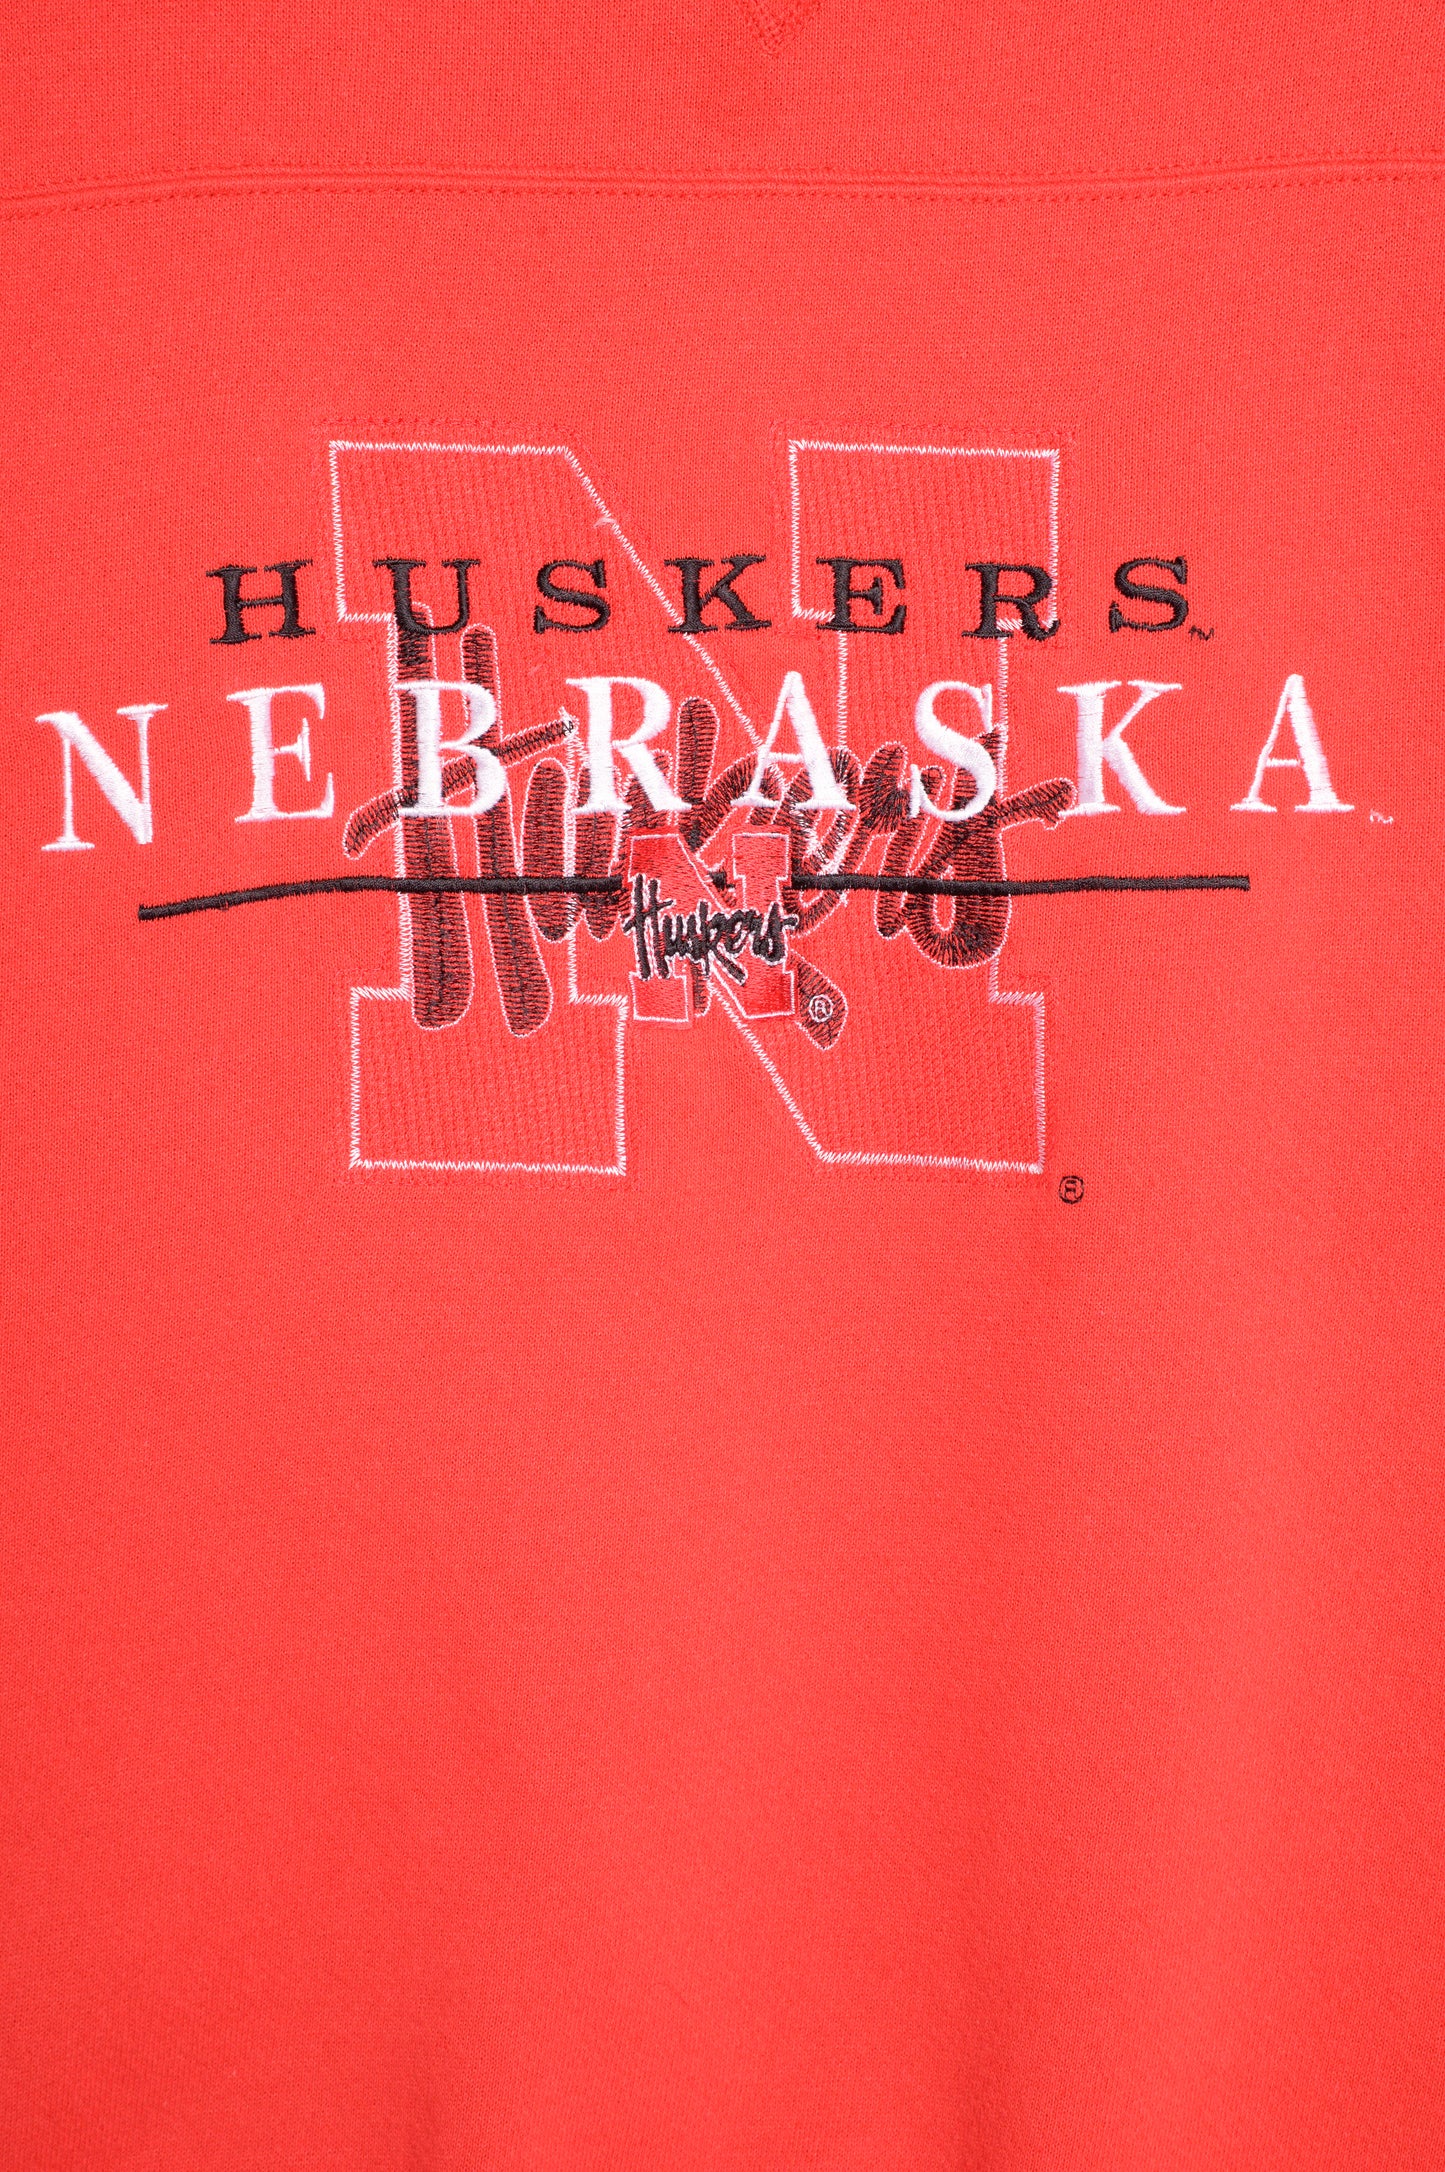 University of Nebraska Cornhuskers Sweatshirt